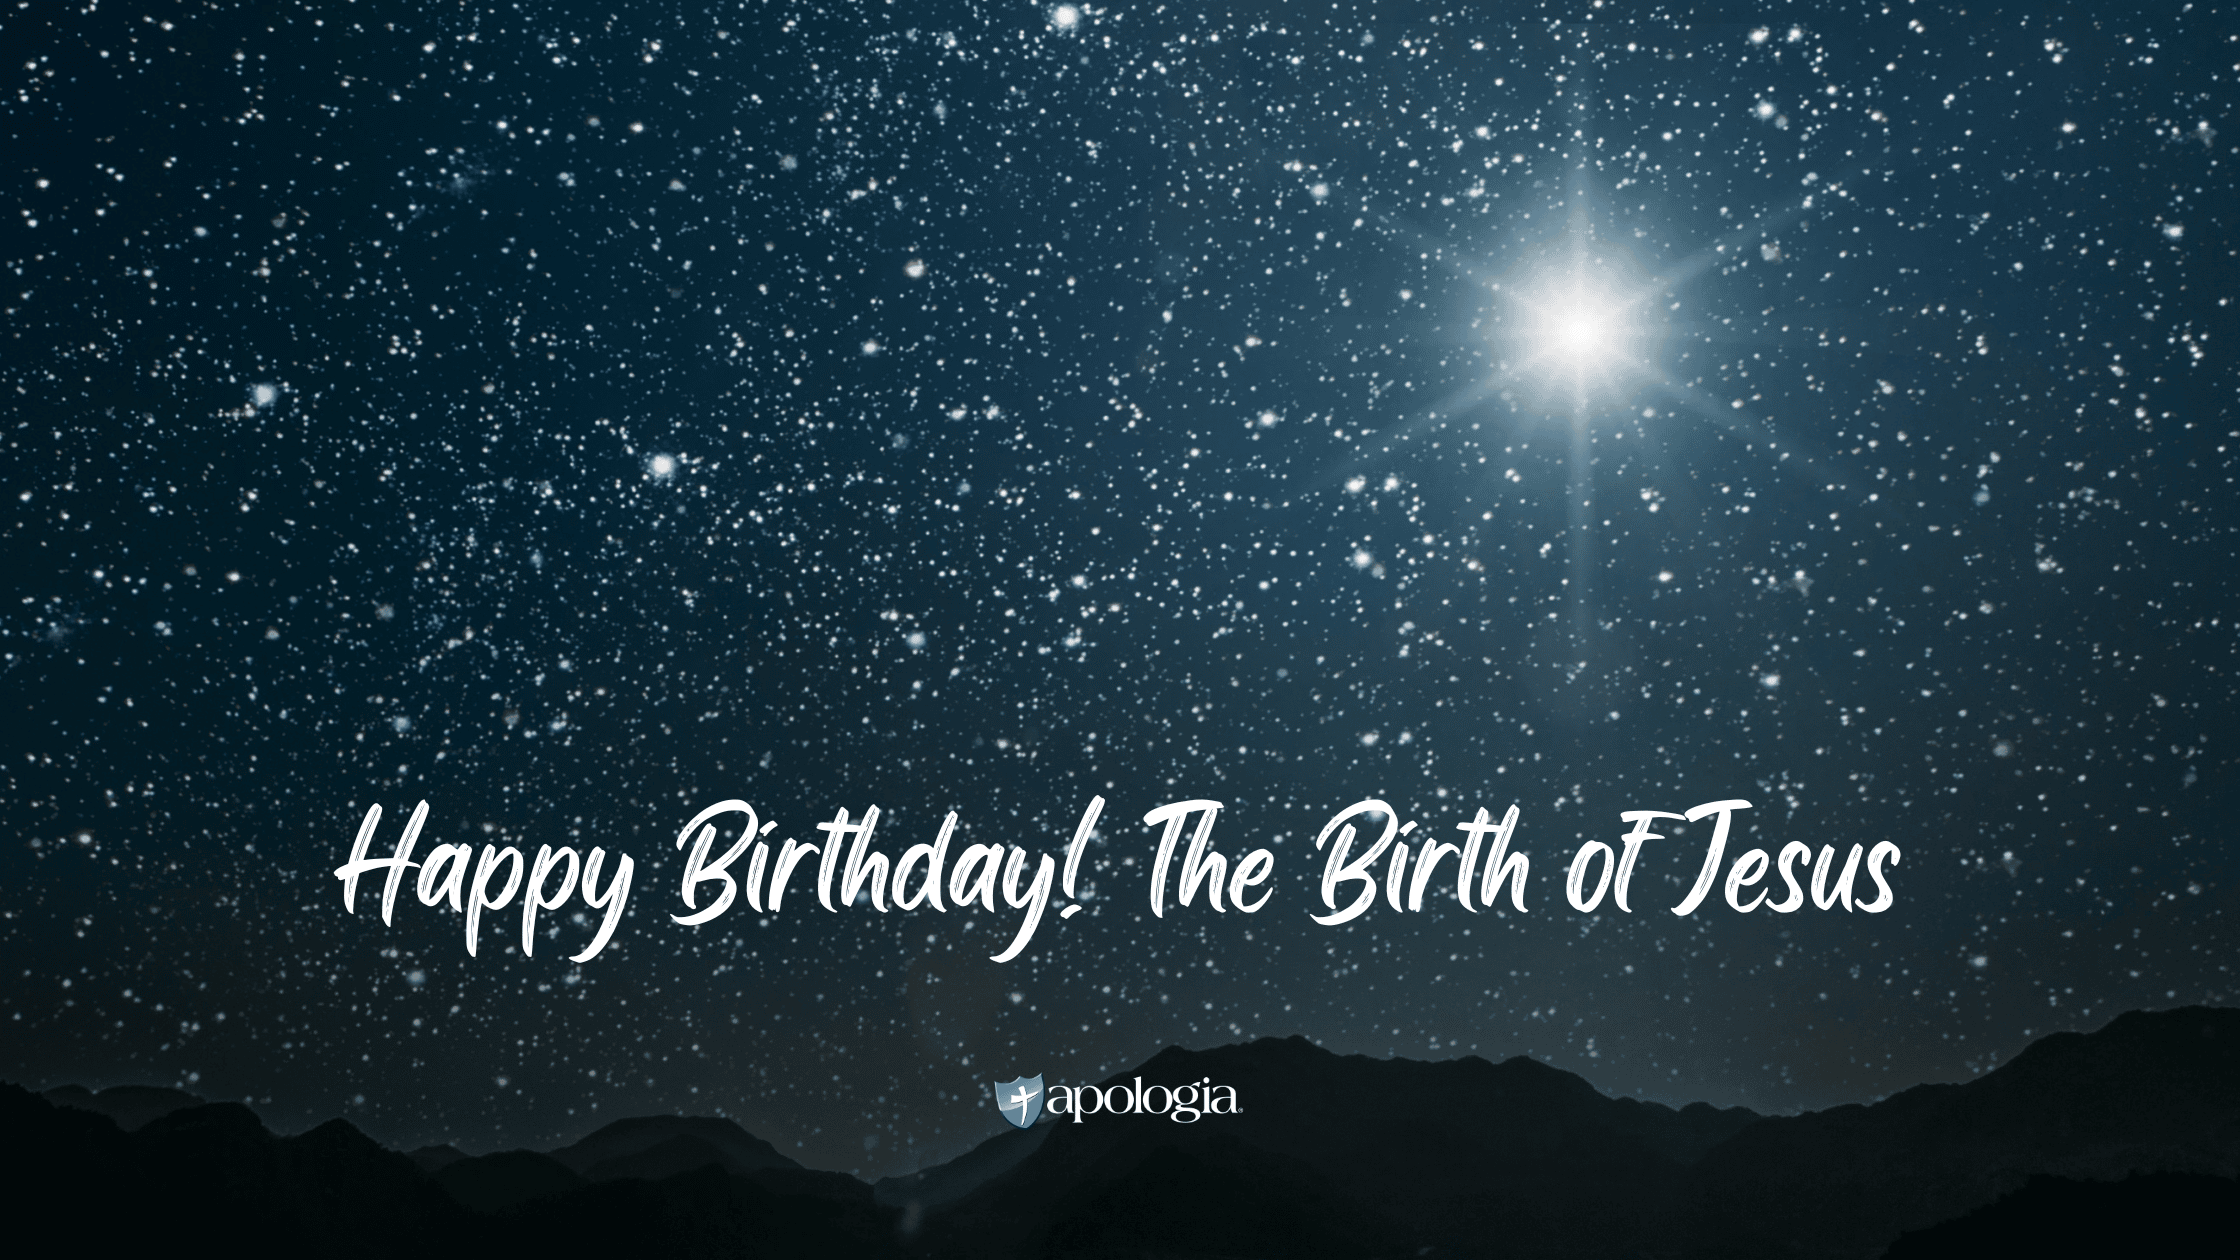 Happy Birthday! The Birth of Jesus